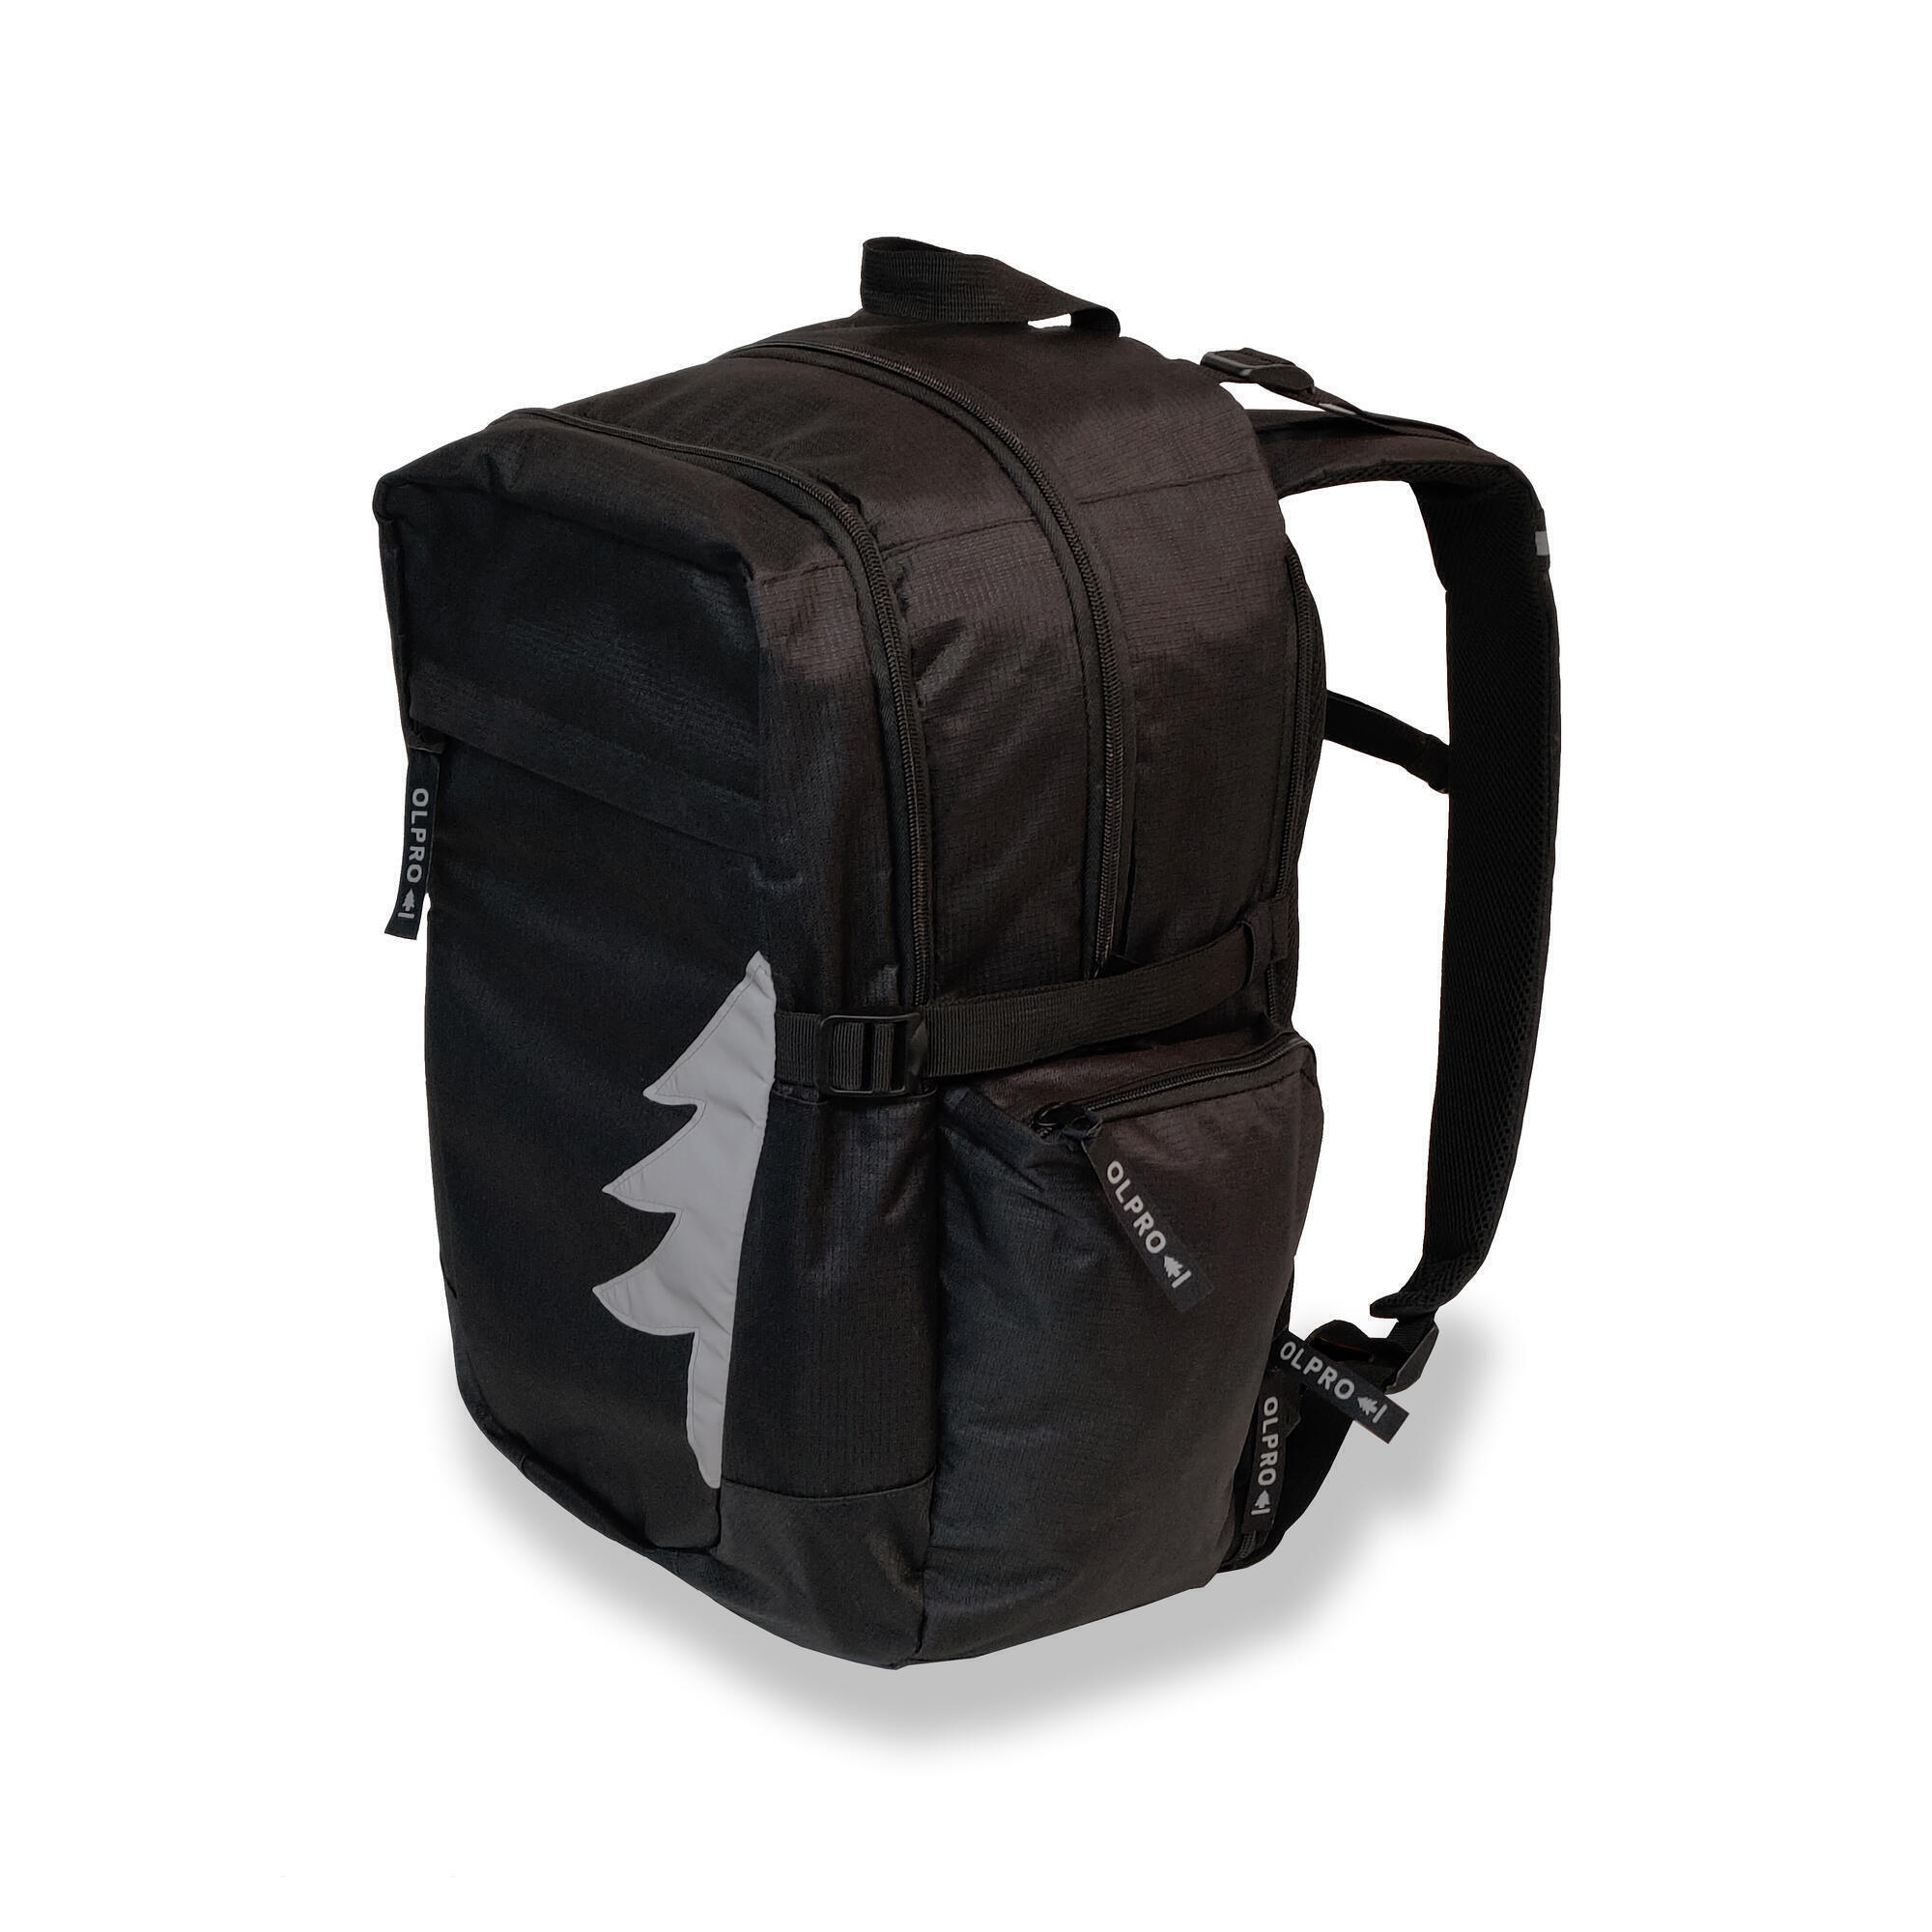 OLPRO OLPRO 32L Daysac Backpack